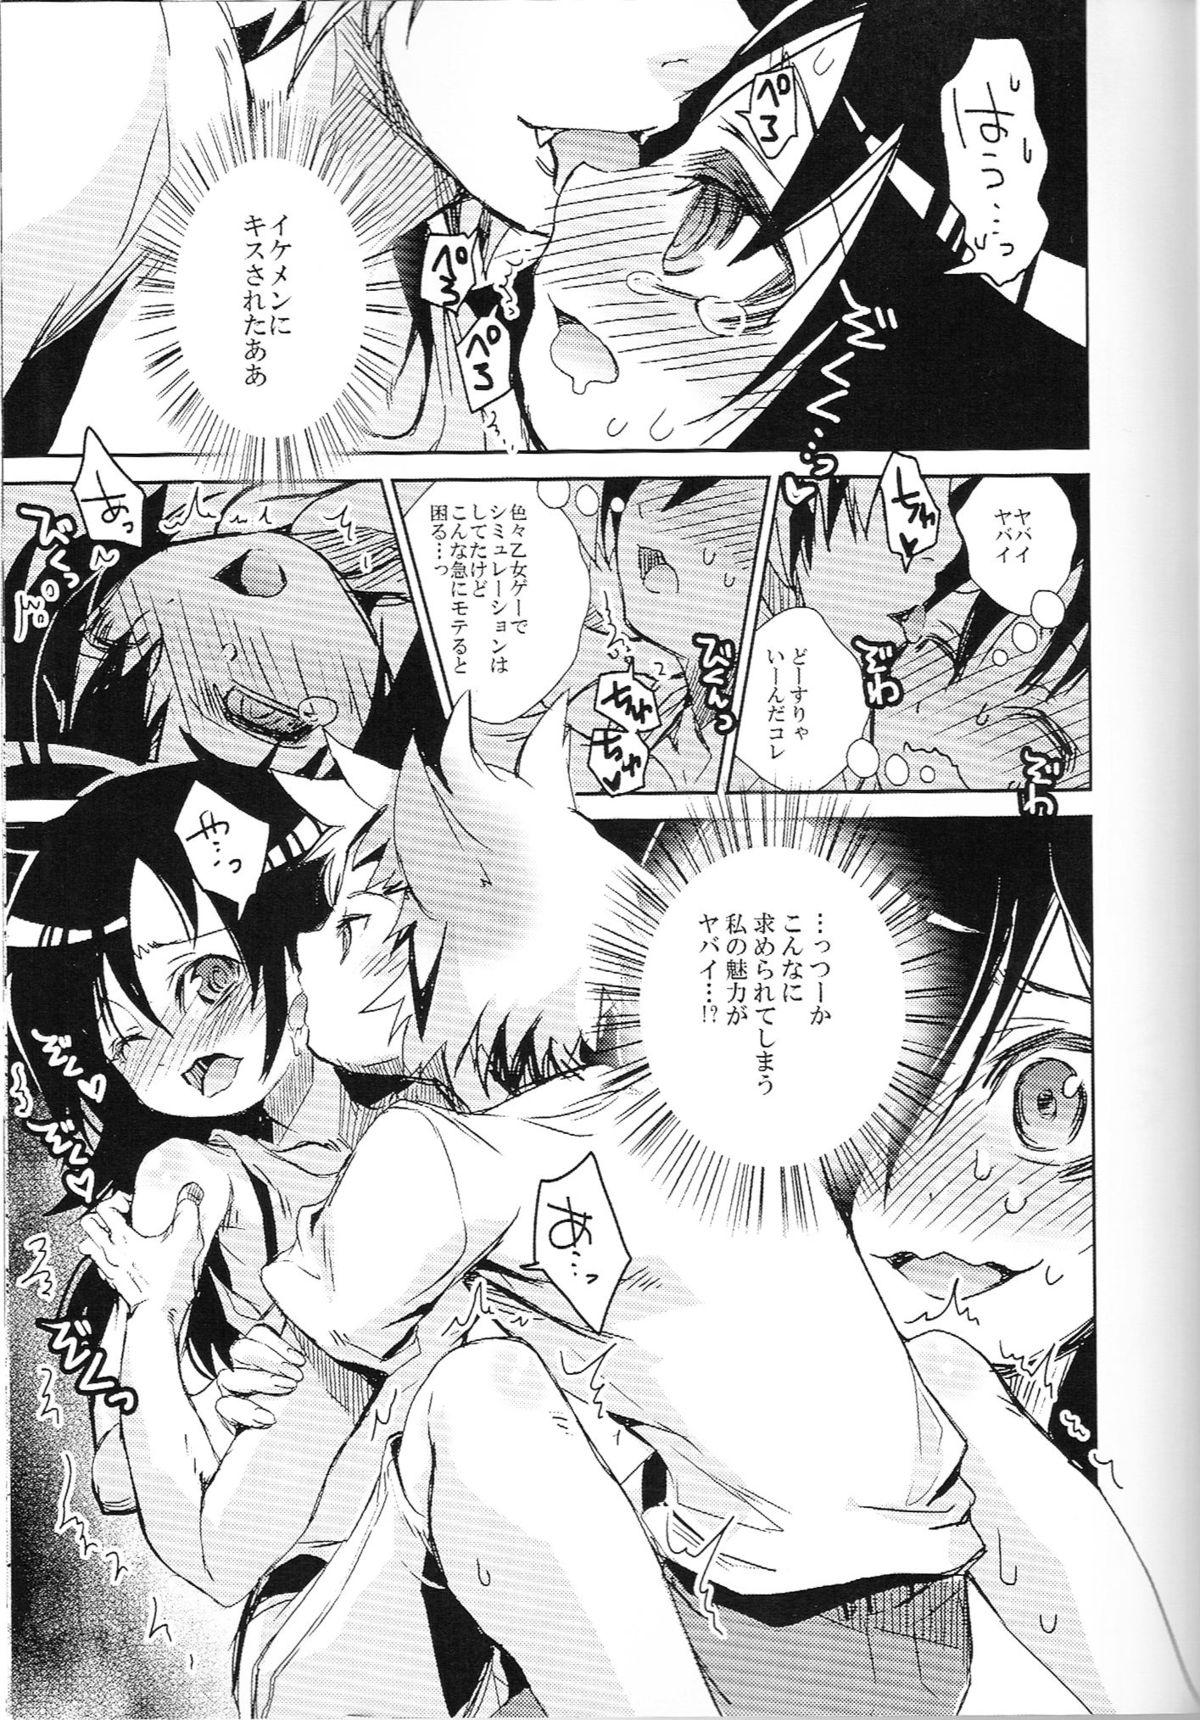 Strange Watashi ga Moteru noha Neko ni dake! - Its not my fault that im not popular Nalgona - Page 6